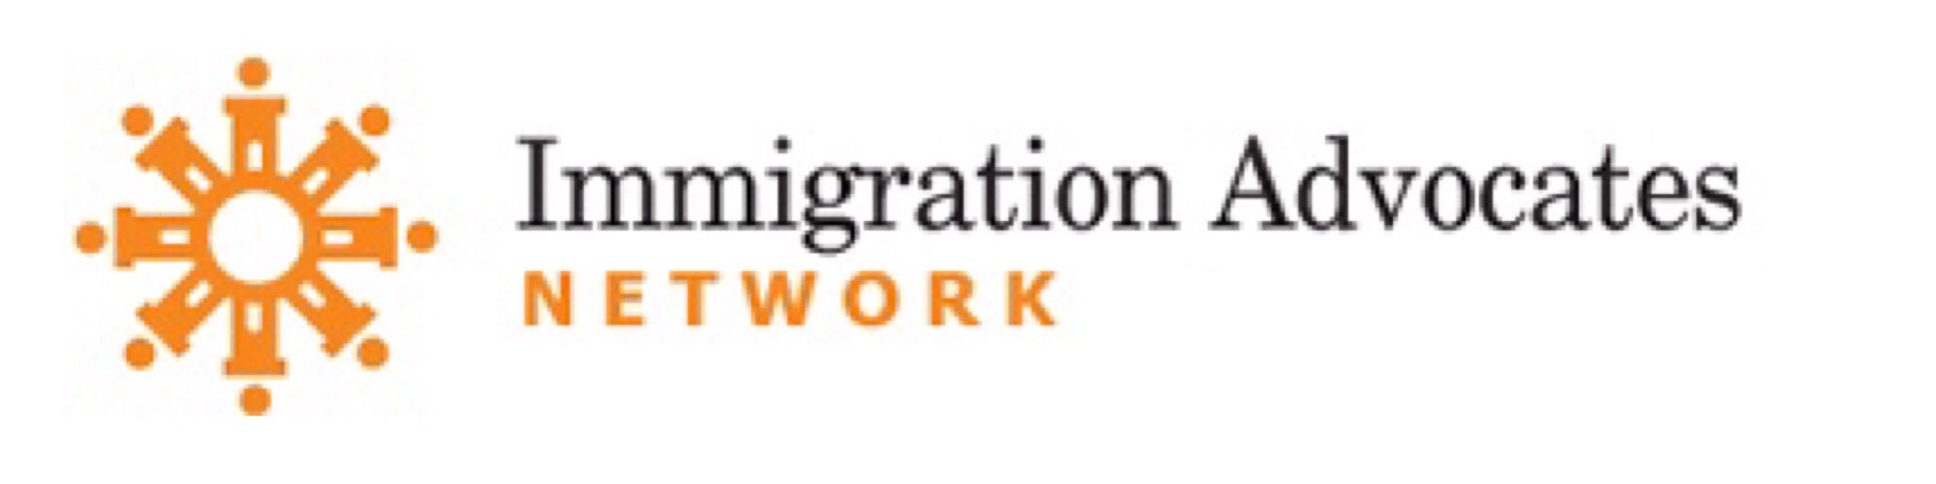 Immigration Advocates Network Logo